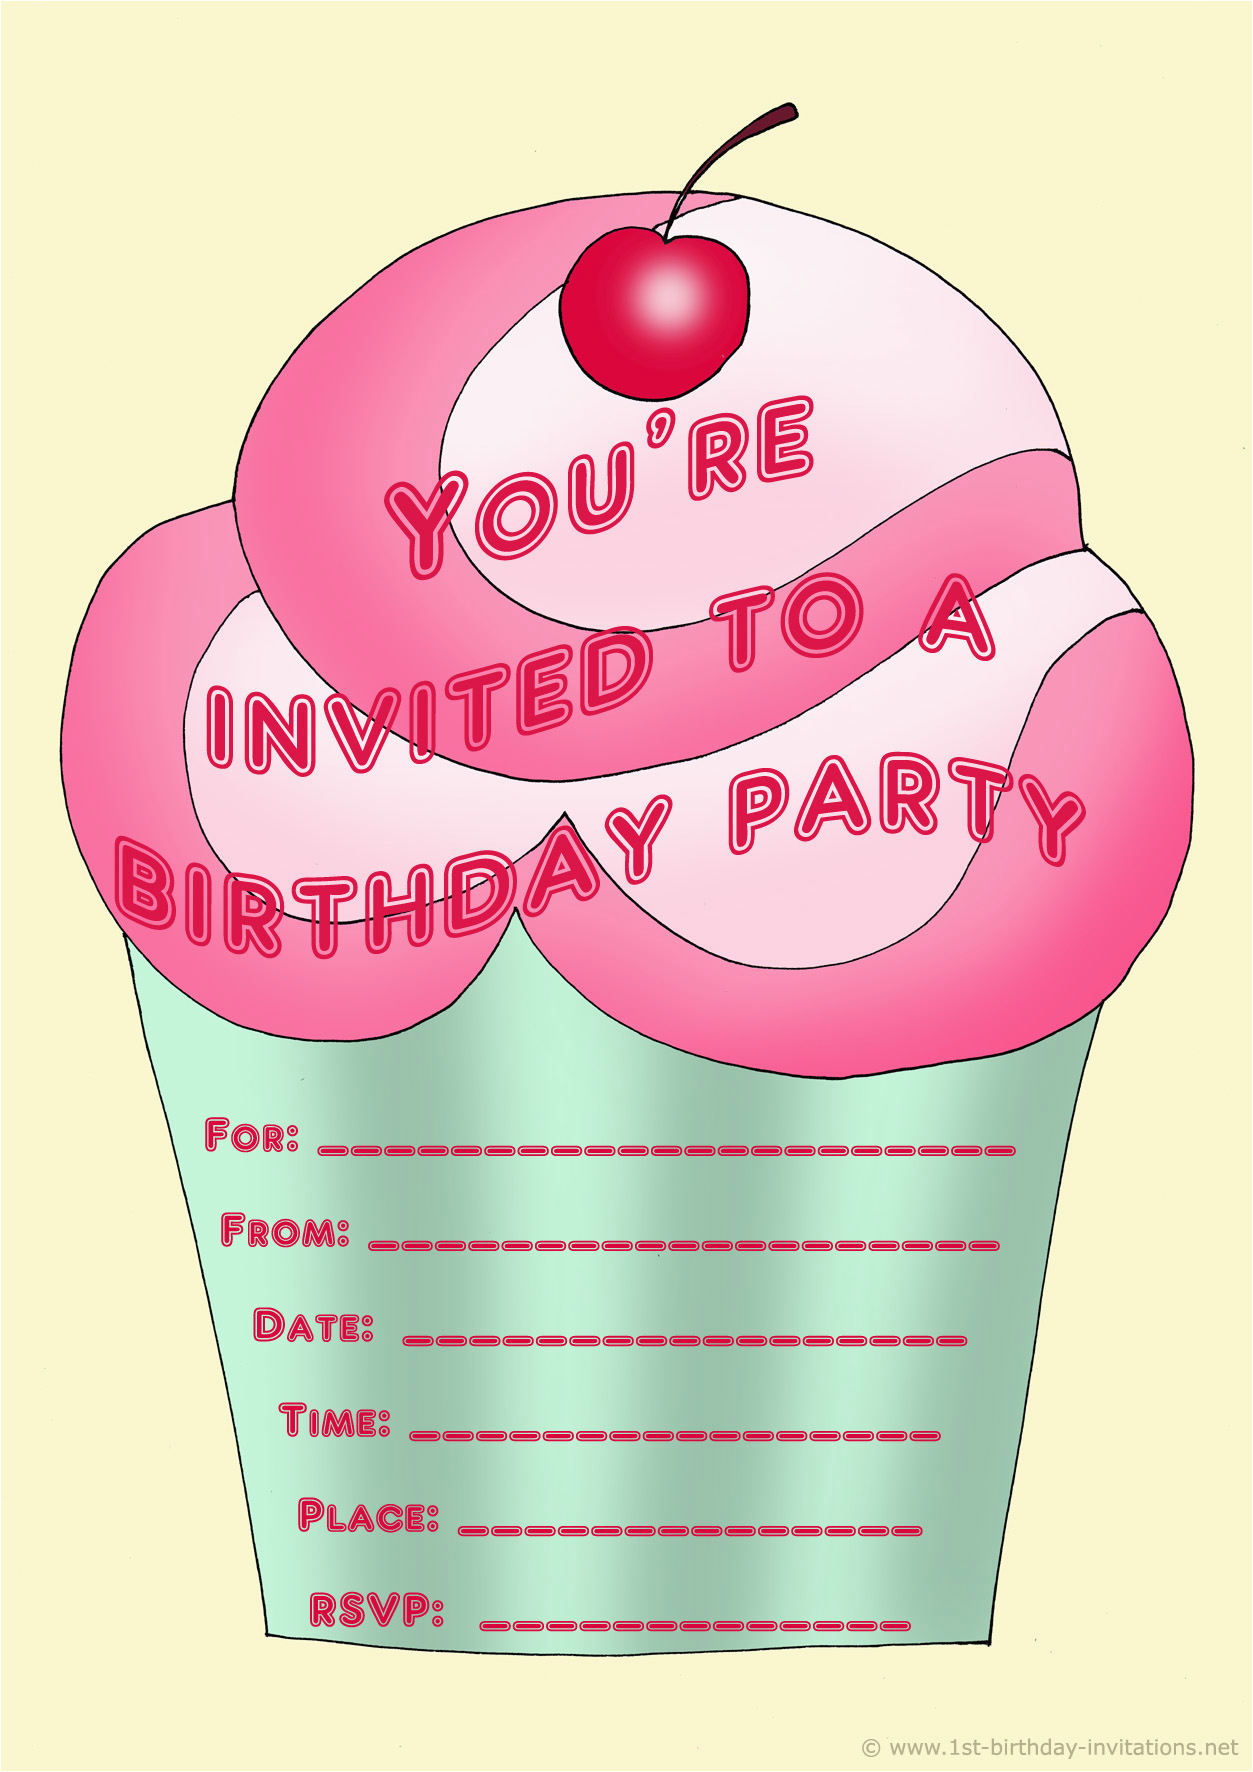 Personalized Birthday Invitations Free Printable Personalized Birthday Invitations for Kids 1st